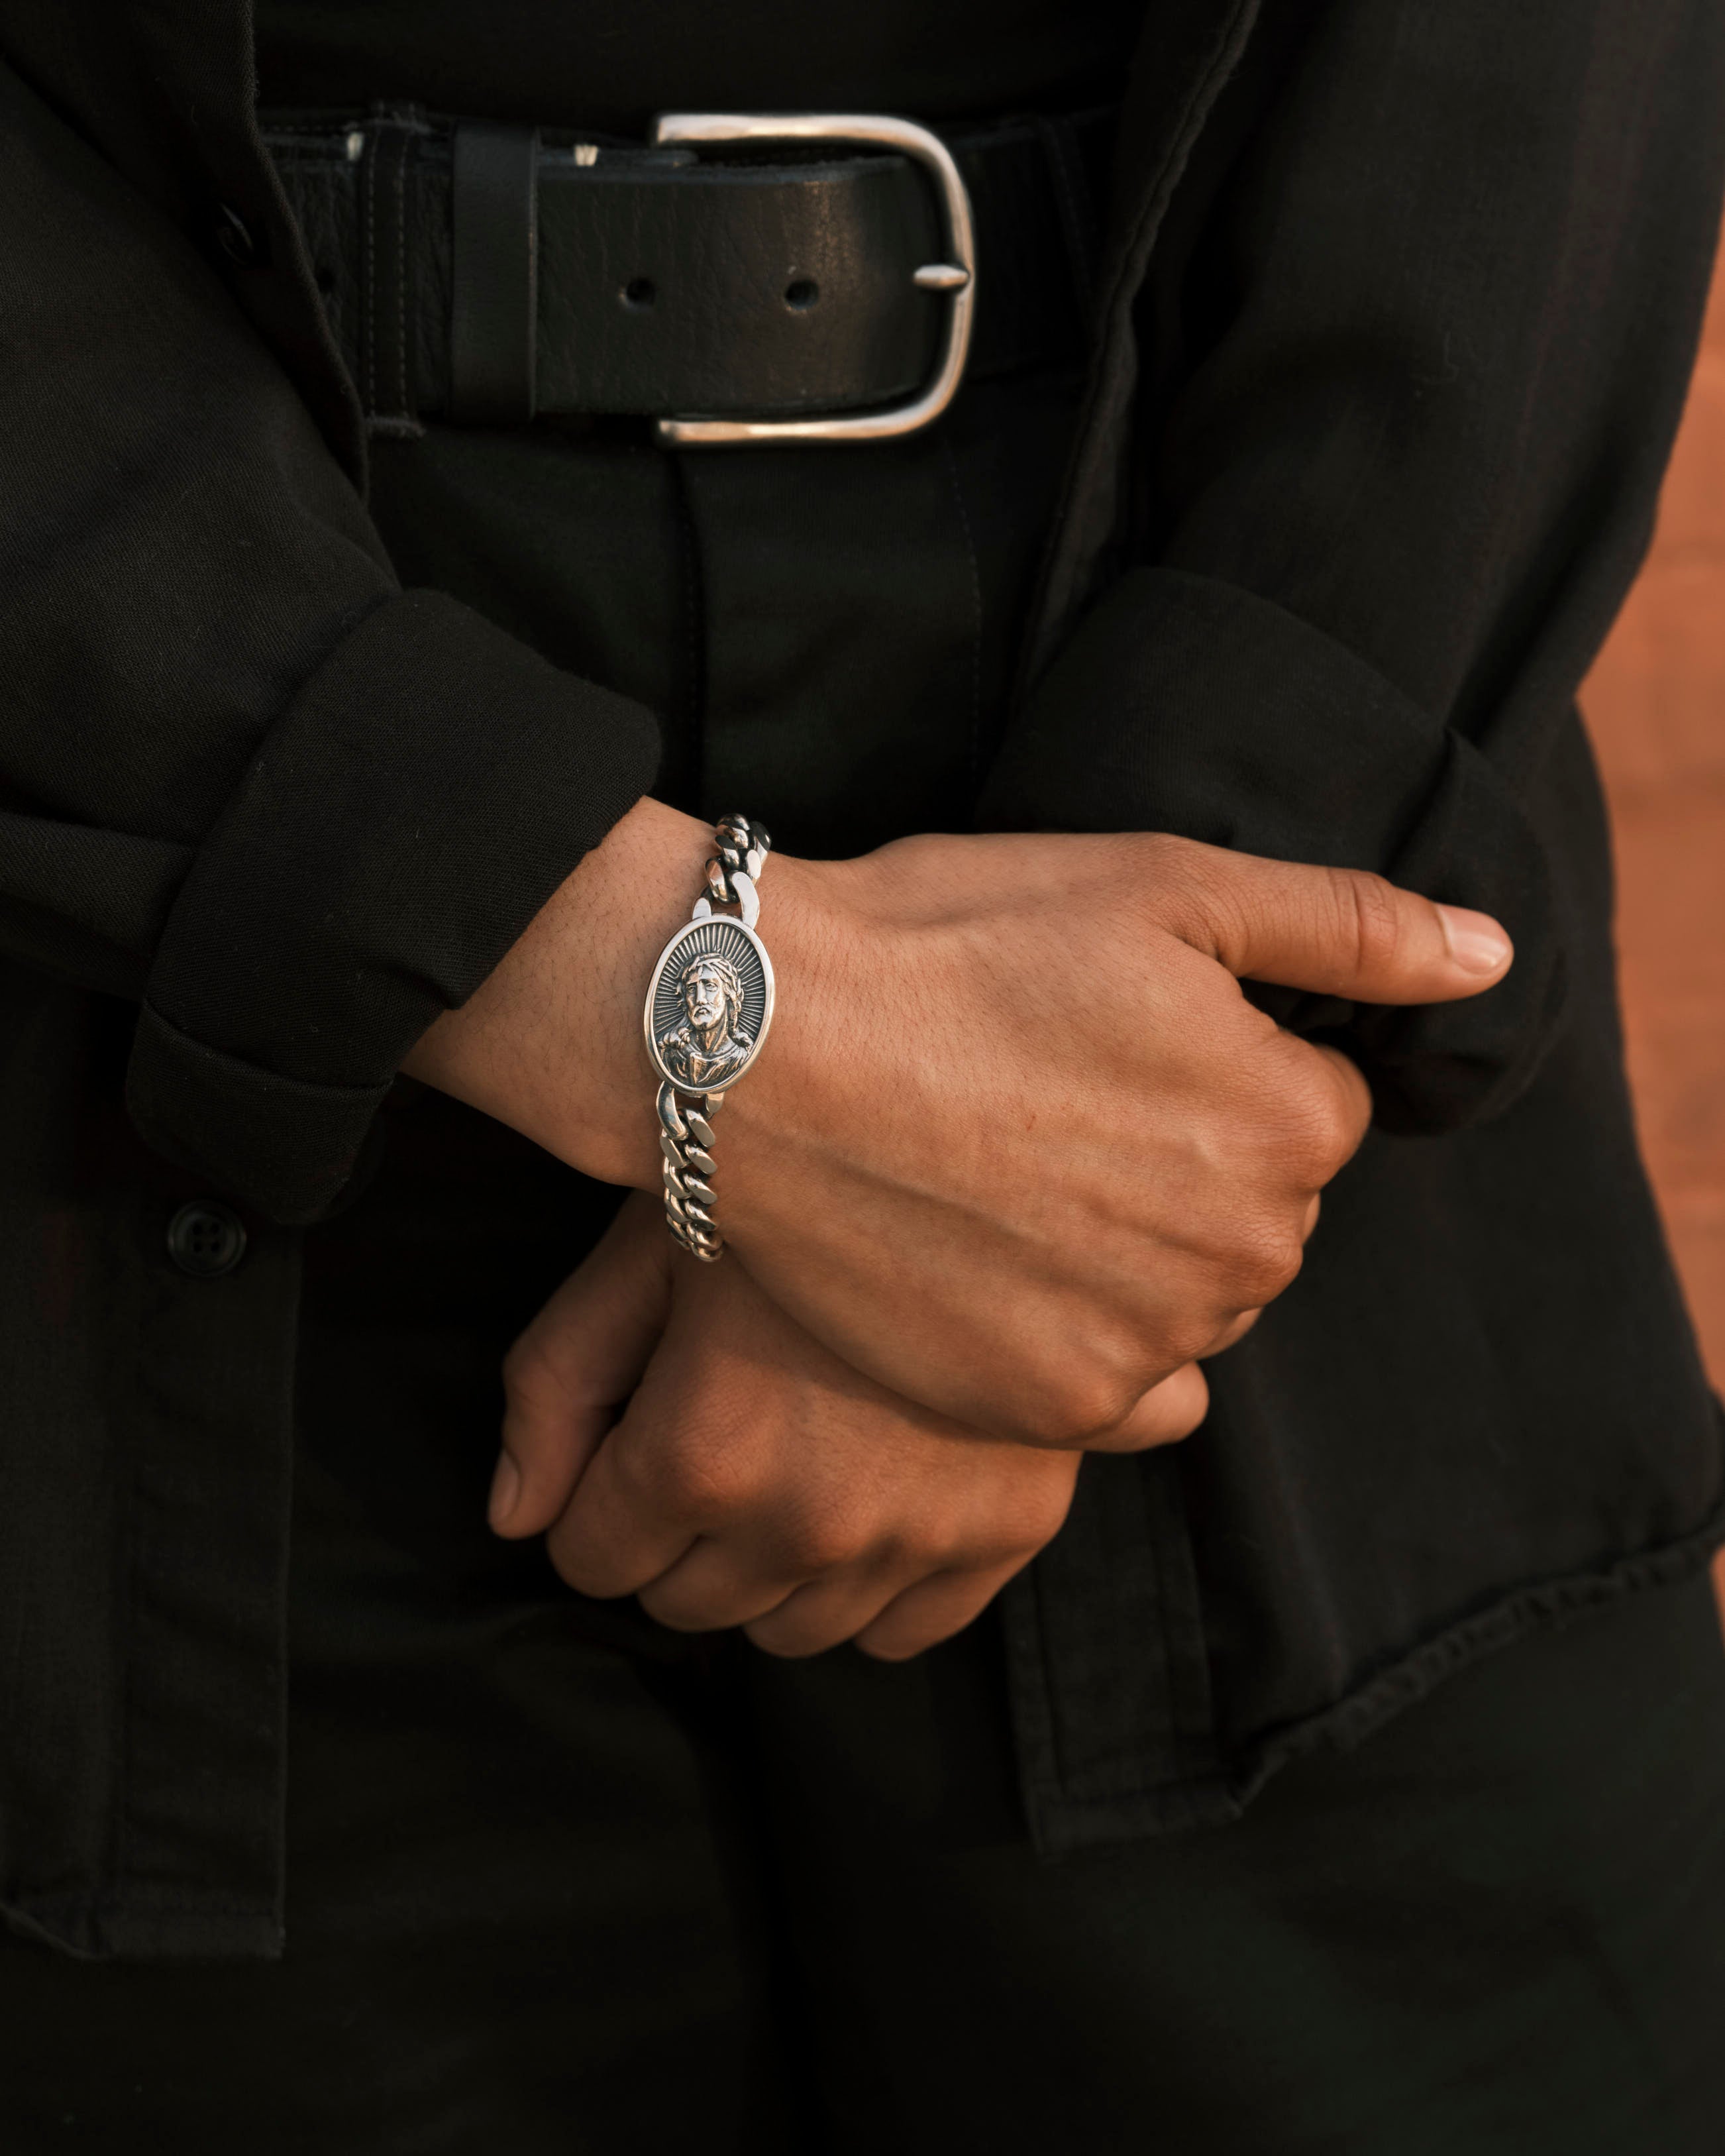 A silver bracelet with a Jesus head medalliaon is worn on a wrist.